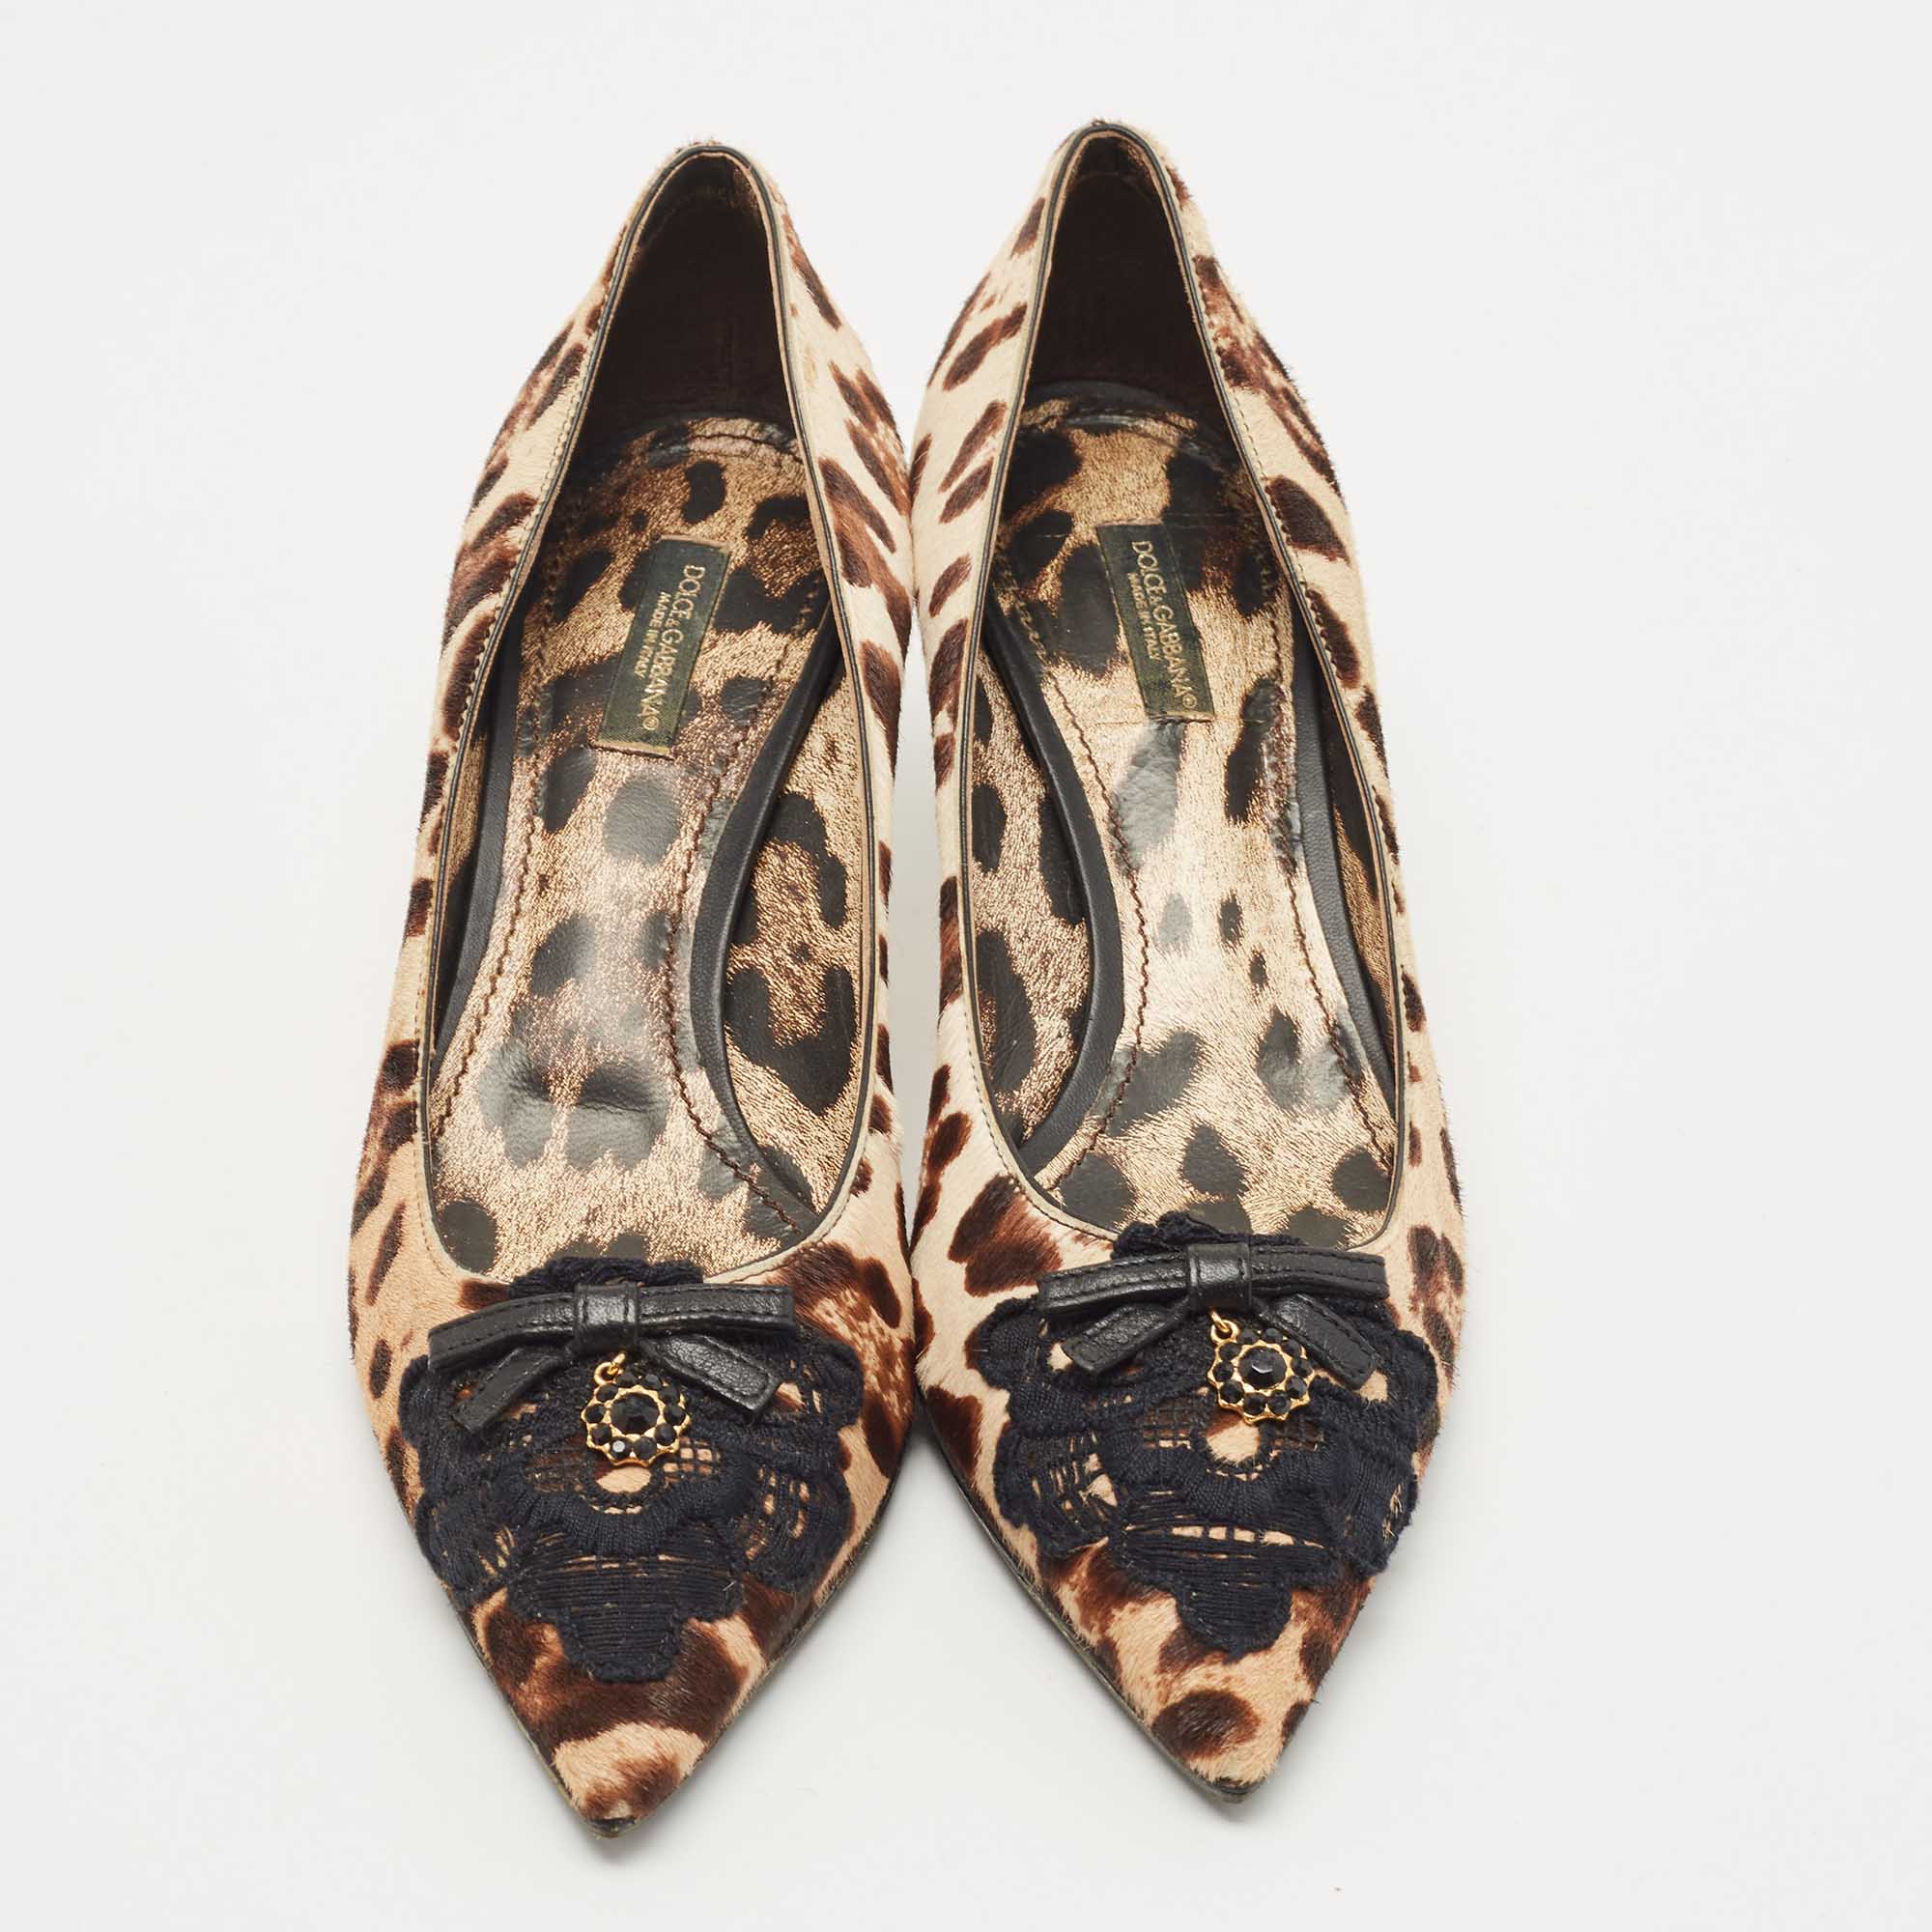 Dolce & Gabbana Brown Calf Hair Leopard Print Pointed Pumps Size 37